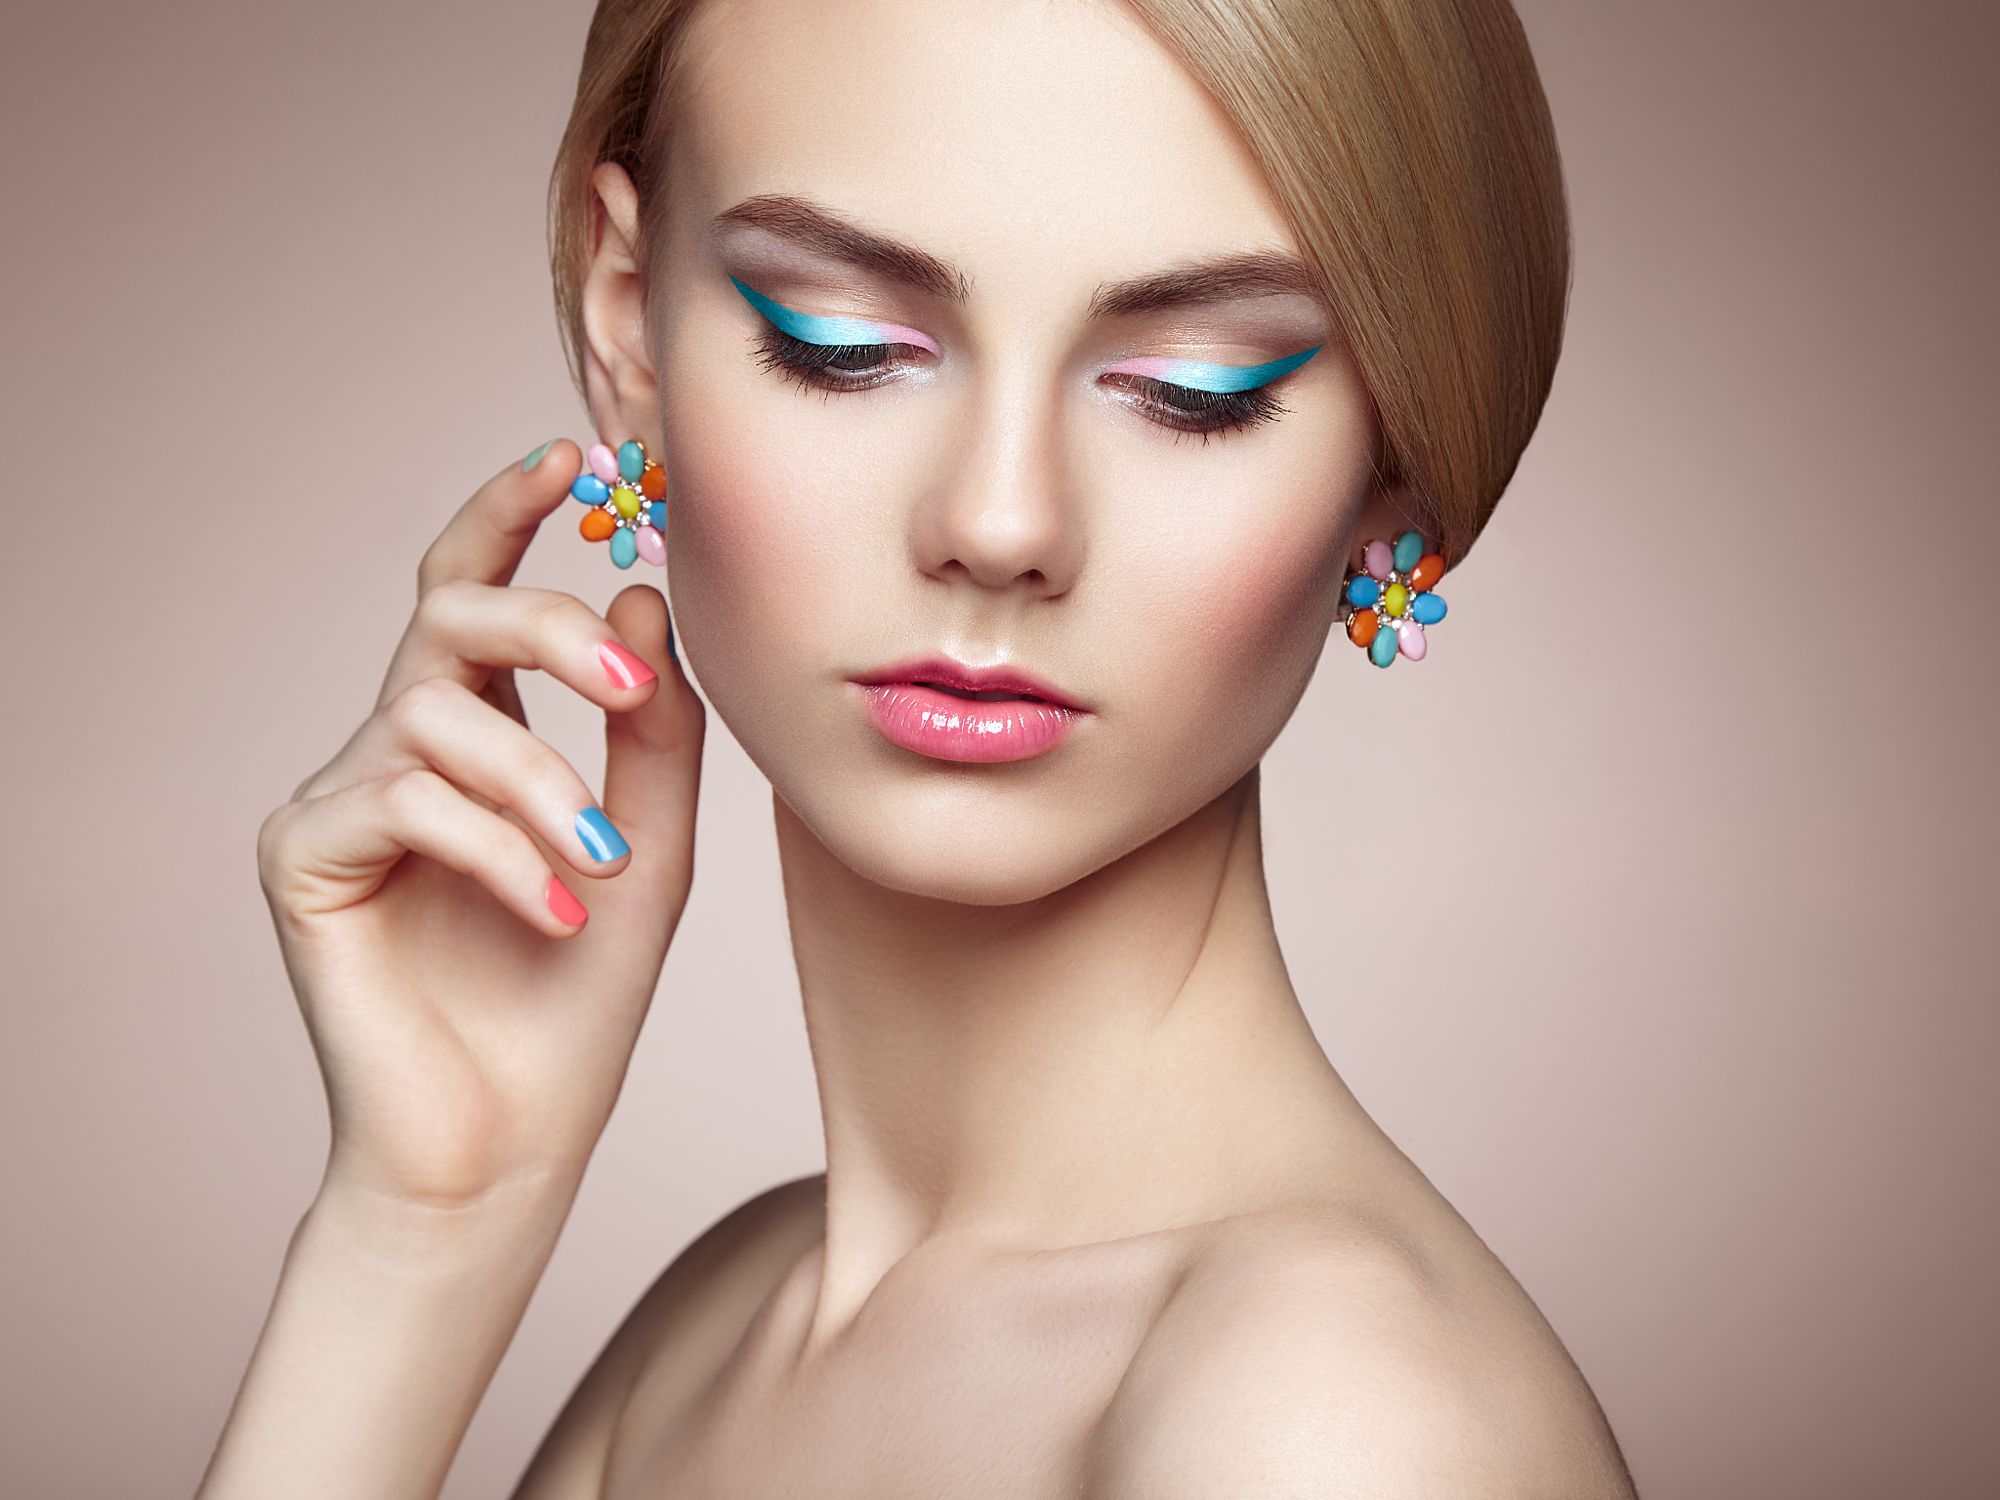 Oleg Gekman Women Blonde Hairbun Colorful Make Up Eyeshadow Earring Painted Nails Lipstick Portrait  2000x1500